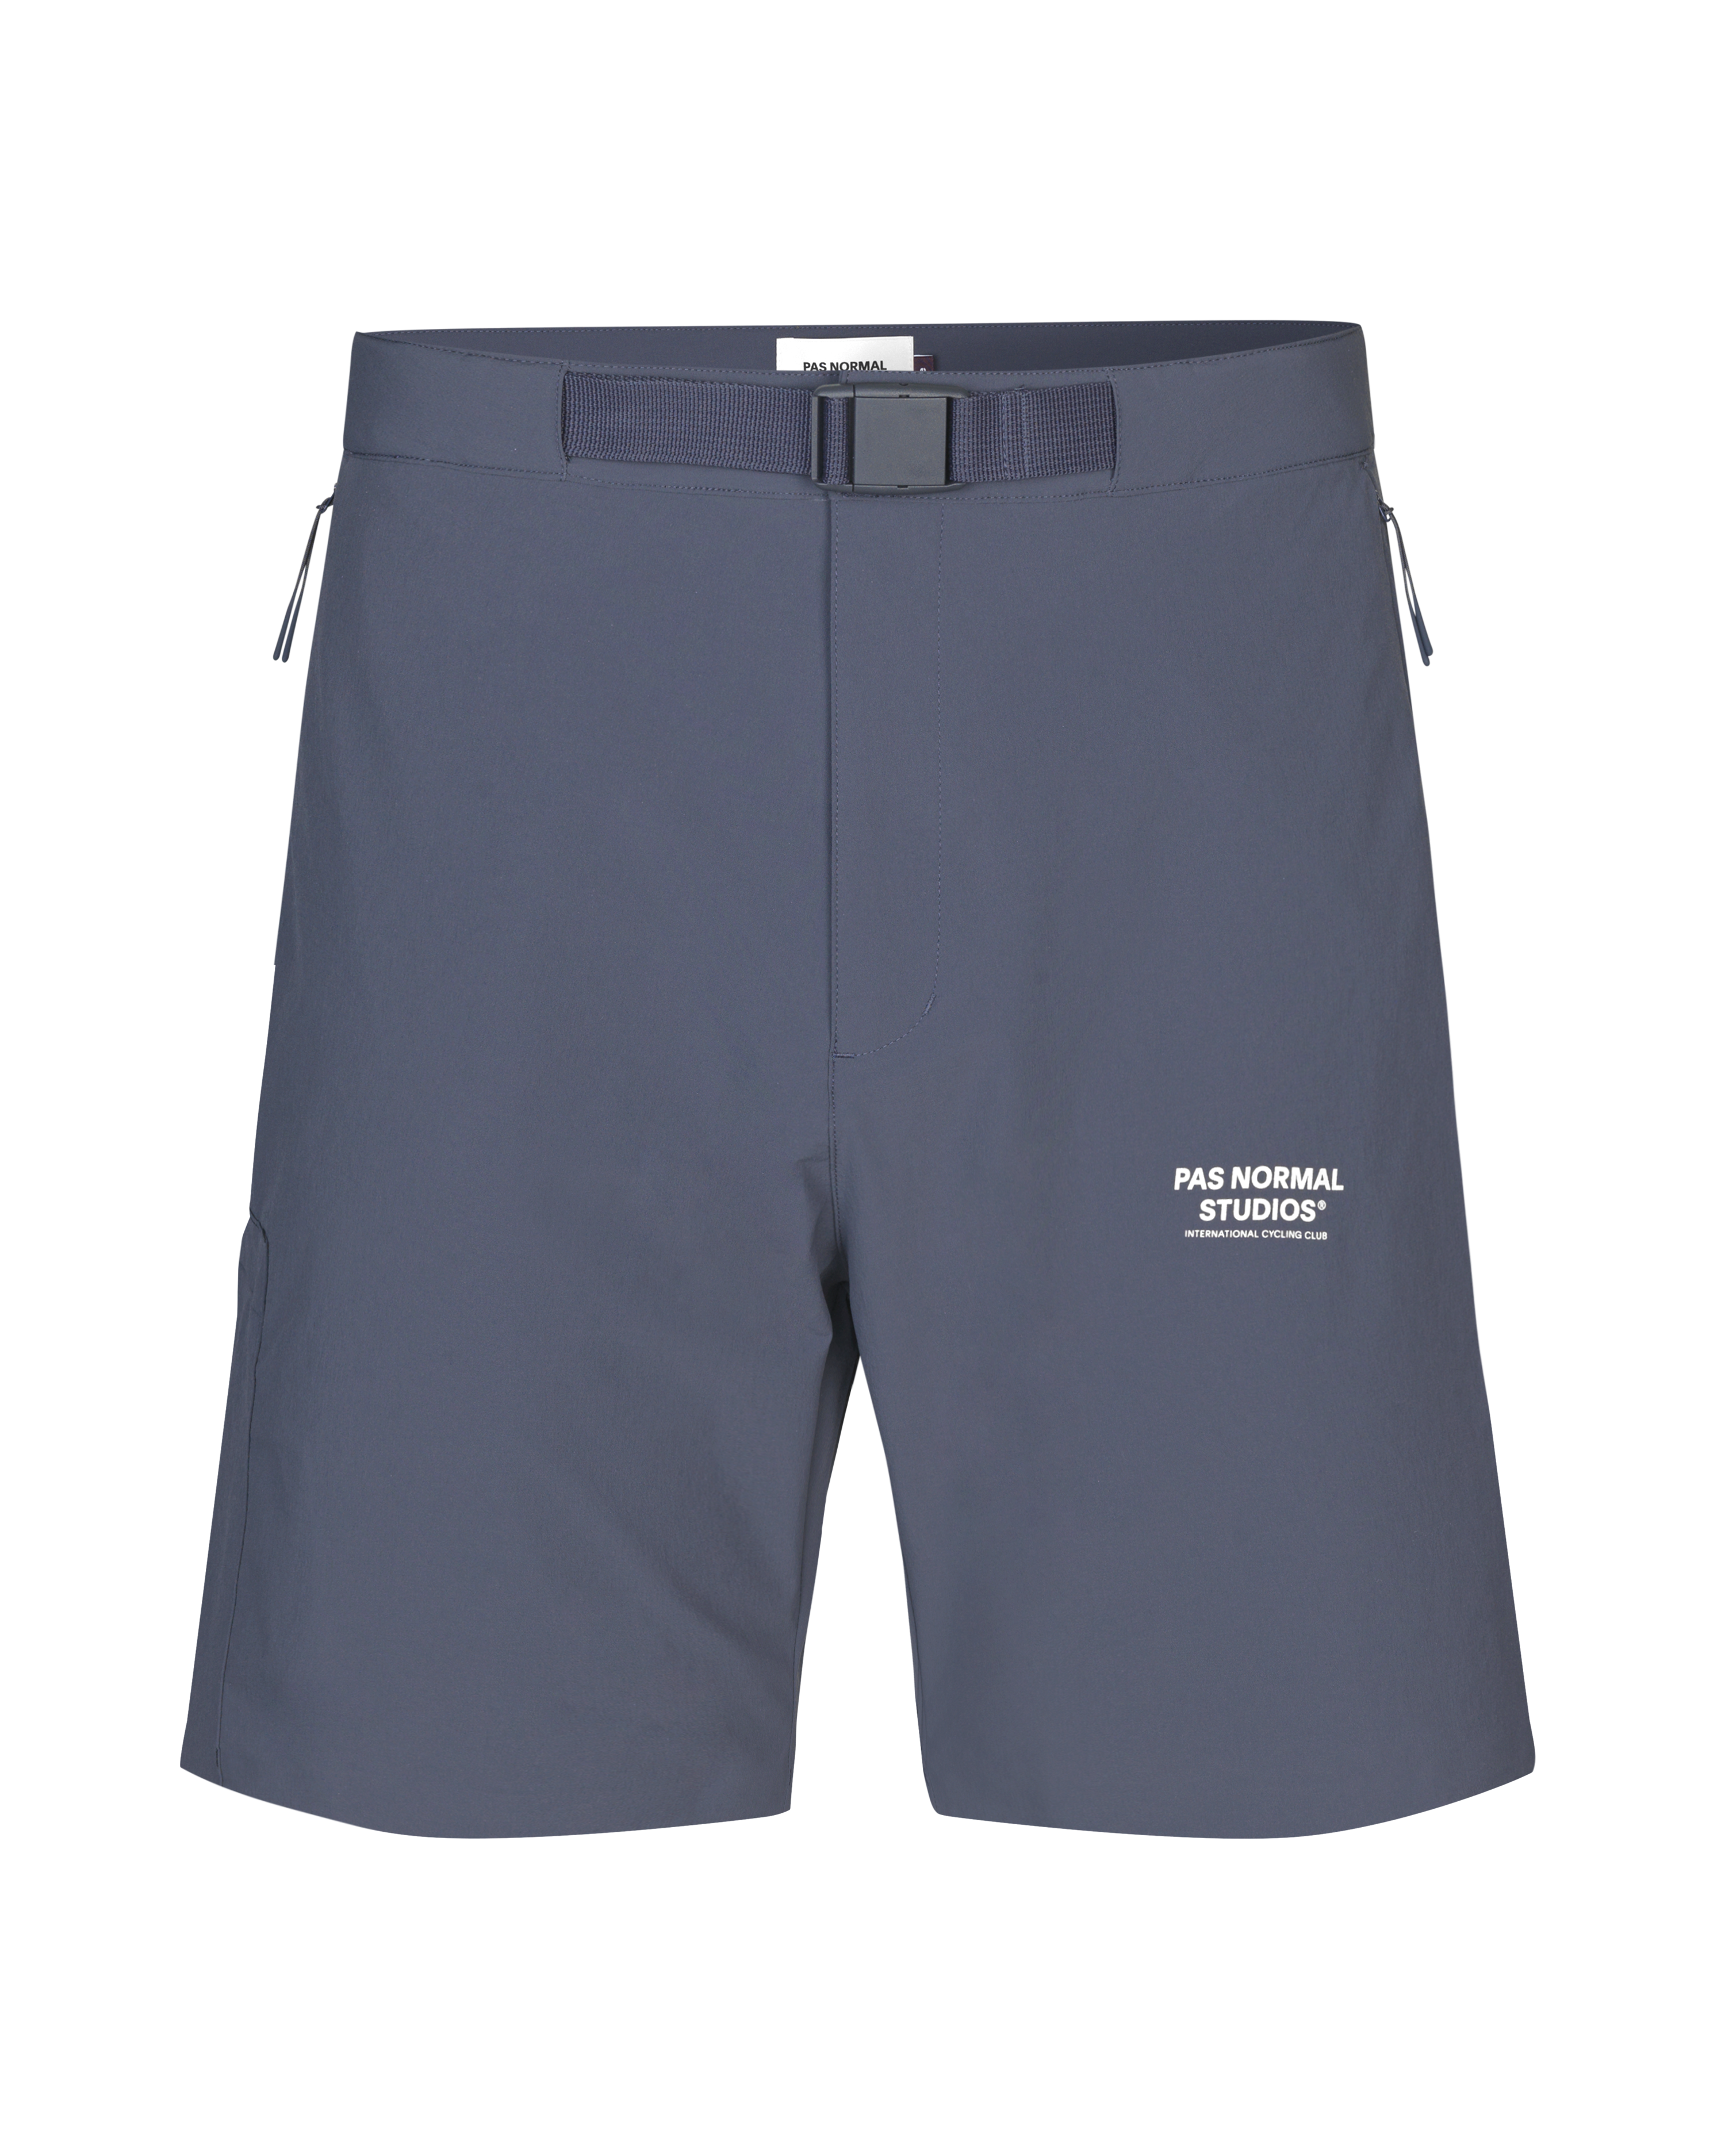 Off-Race Shorts - Classic Blue